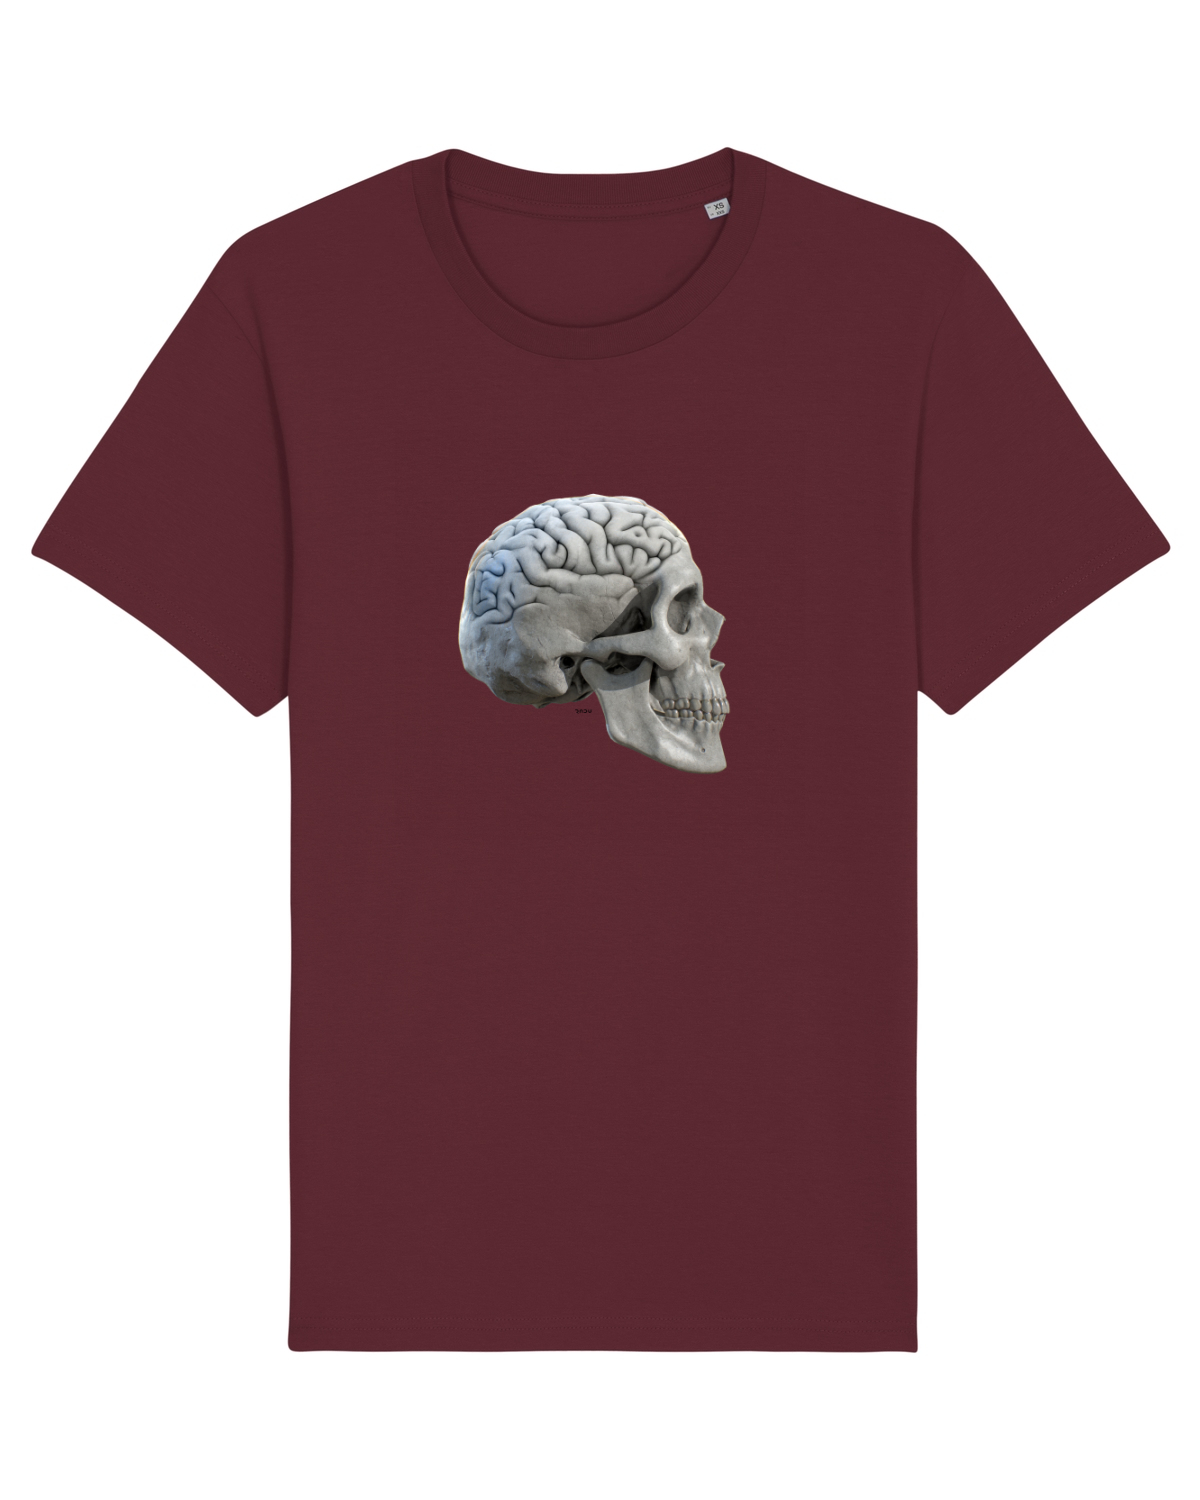 Craniu cu creier - skullbrain 01b